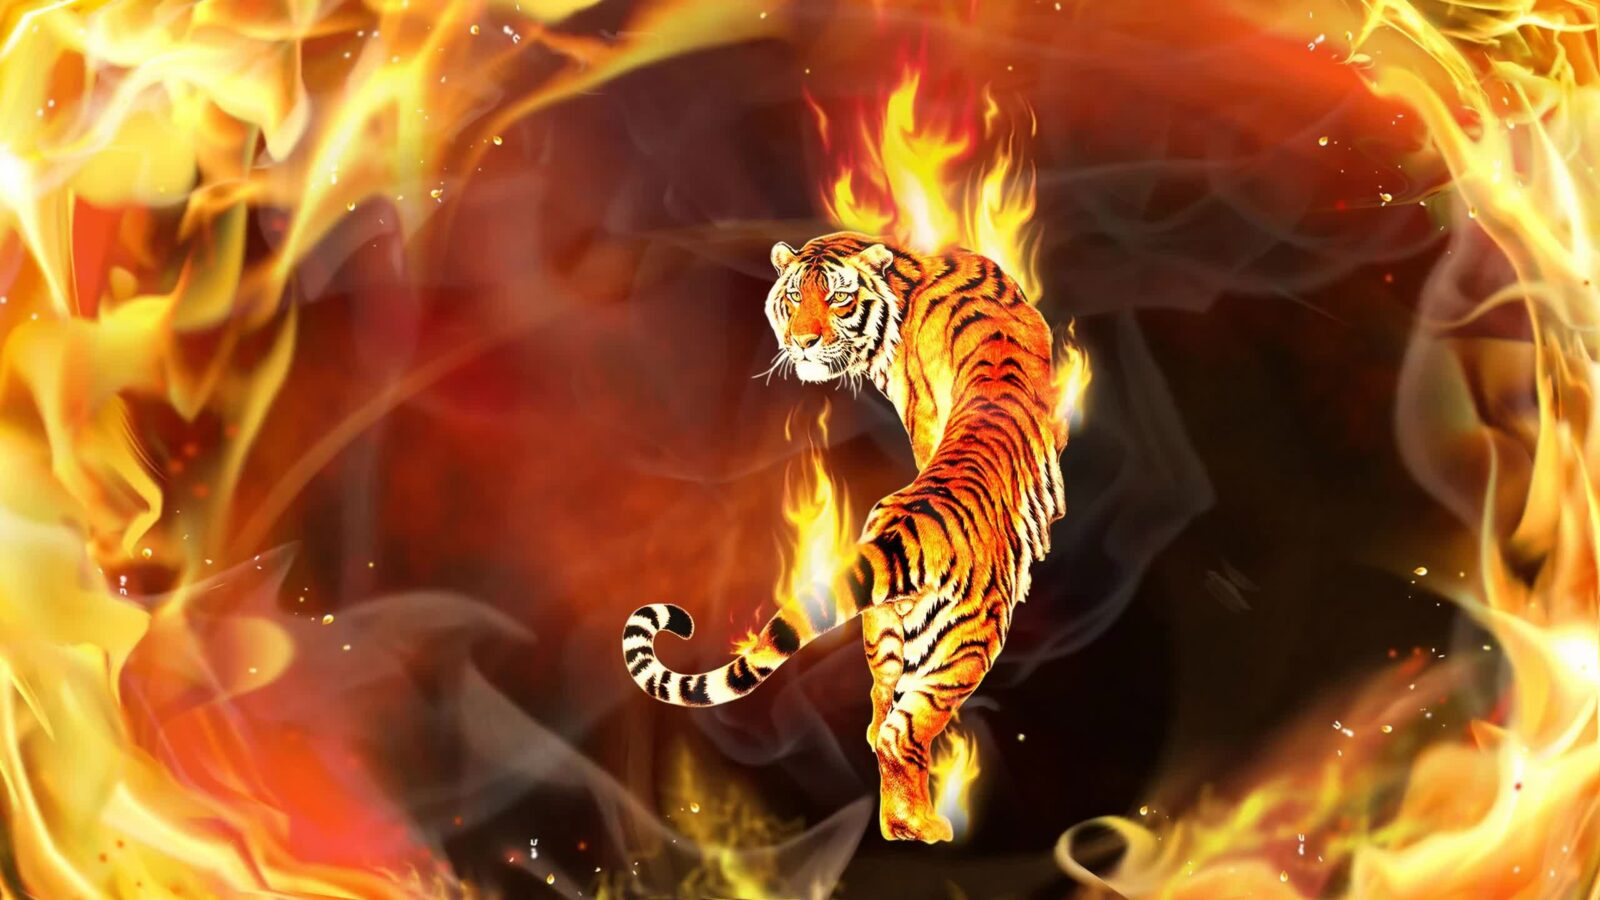 Tiger In Flames Digital Art 2K Quality - Free Live Wallpaper - Live